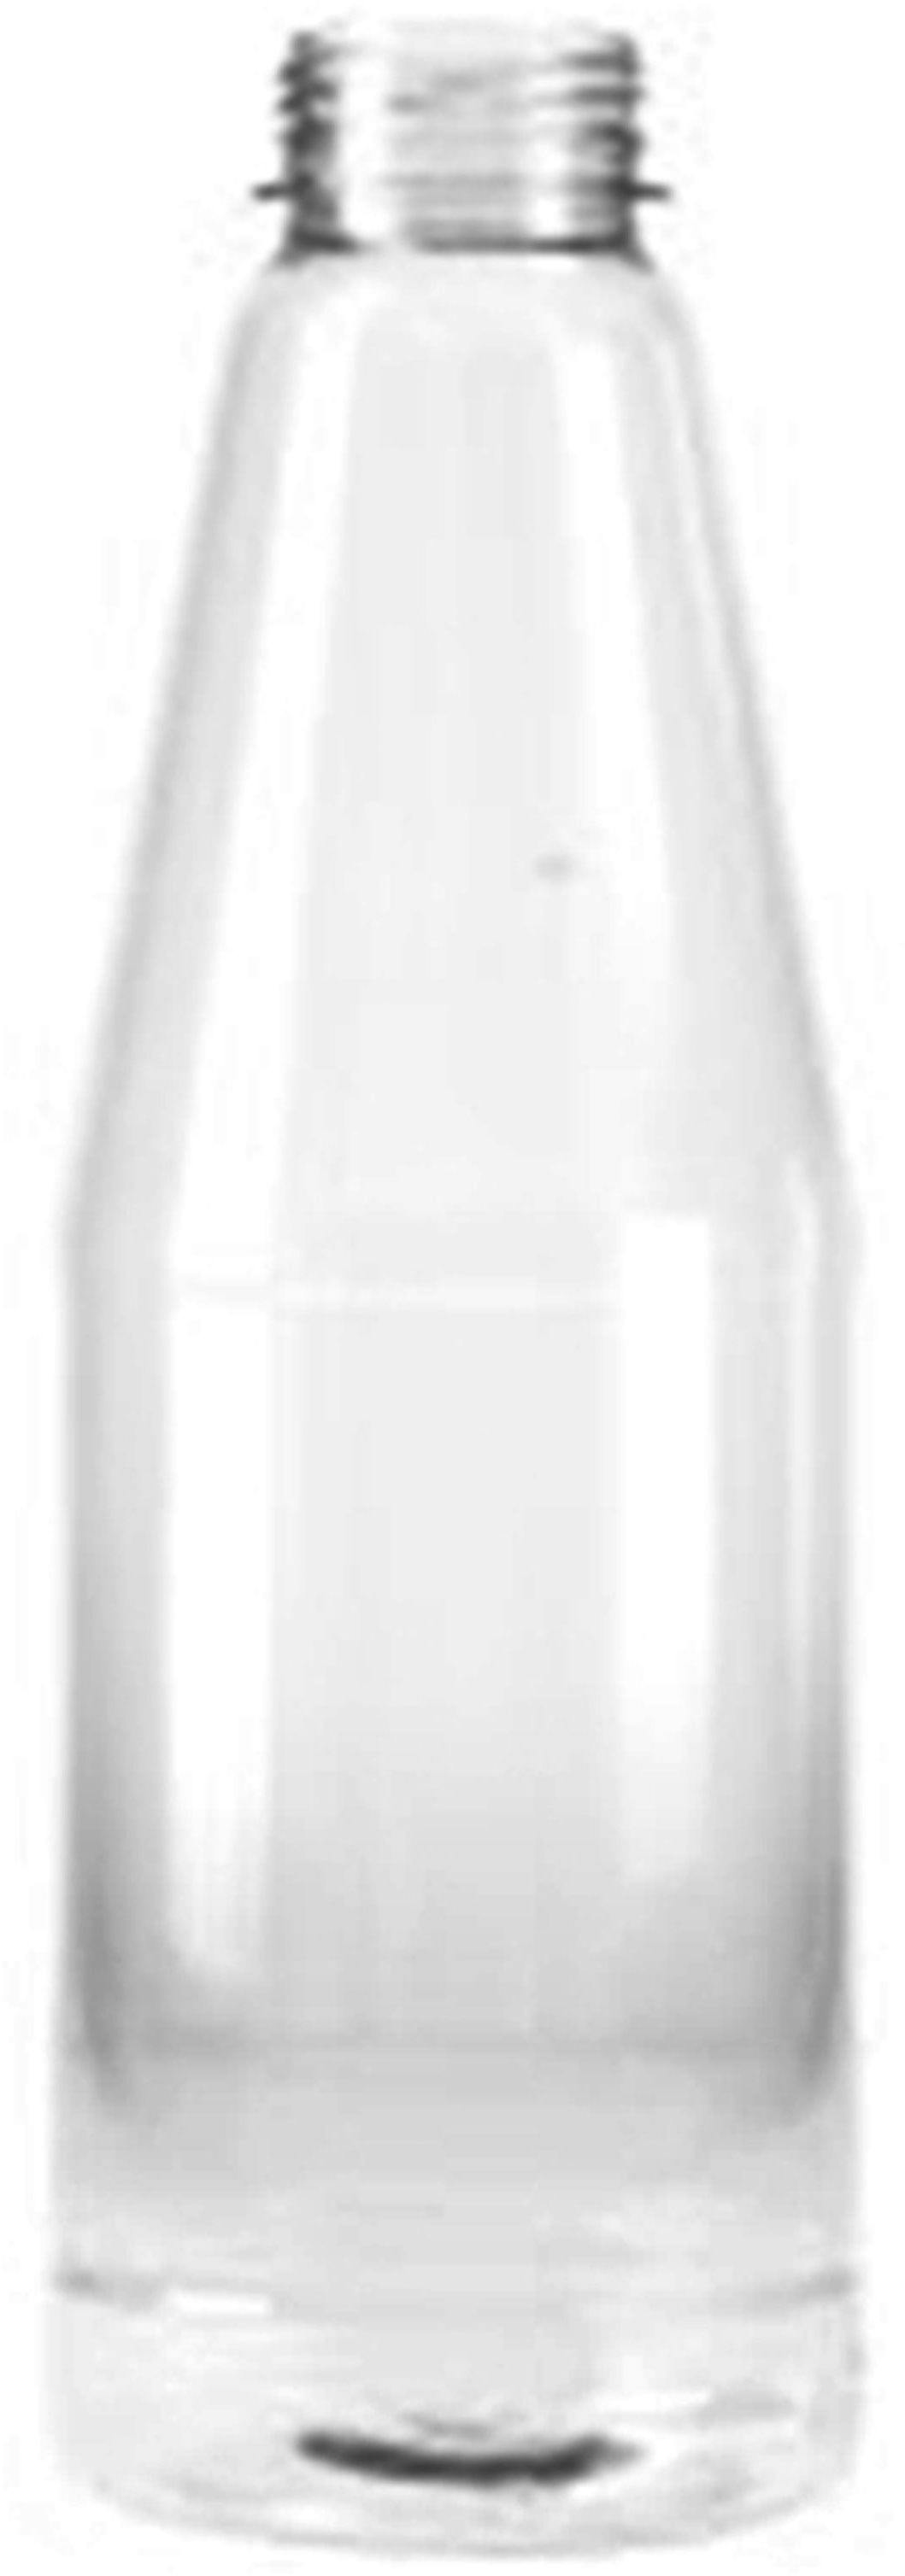 Bottle PET TRNSP 1L D38-